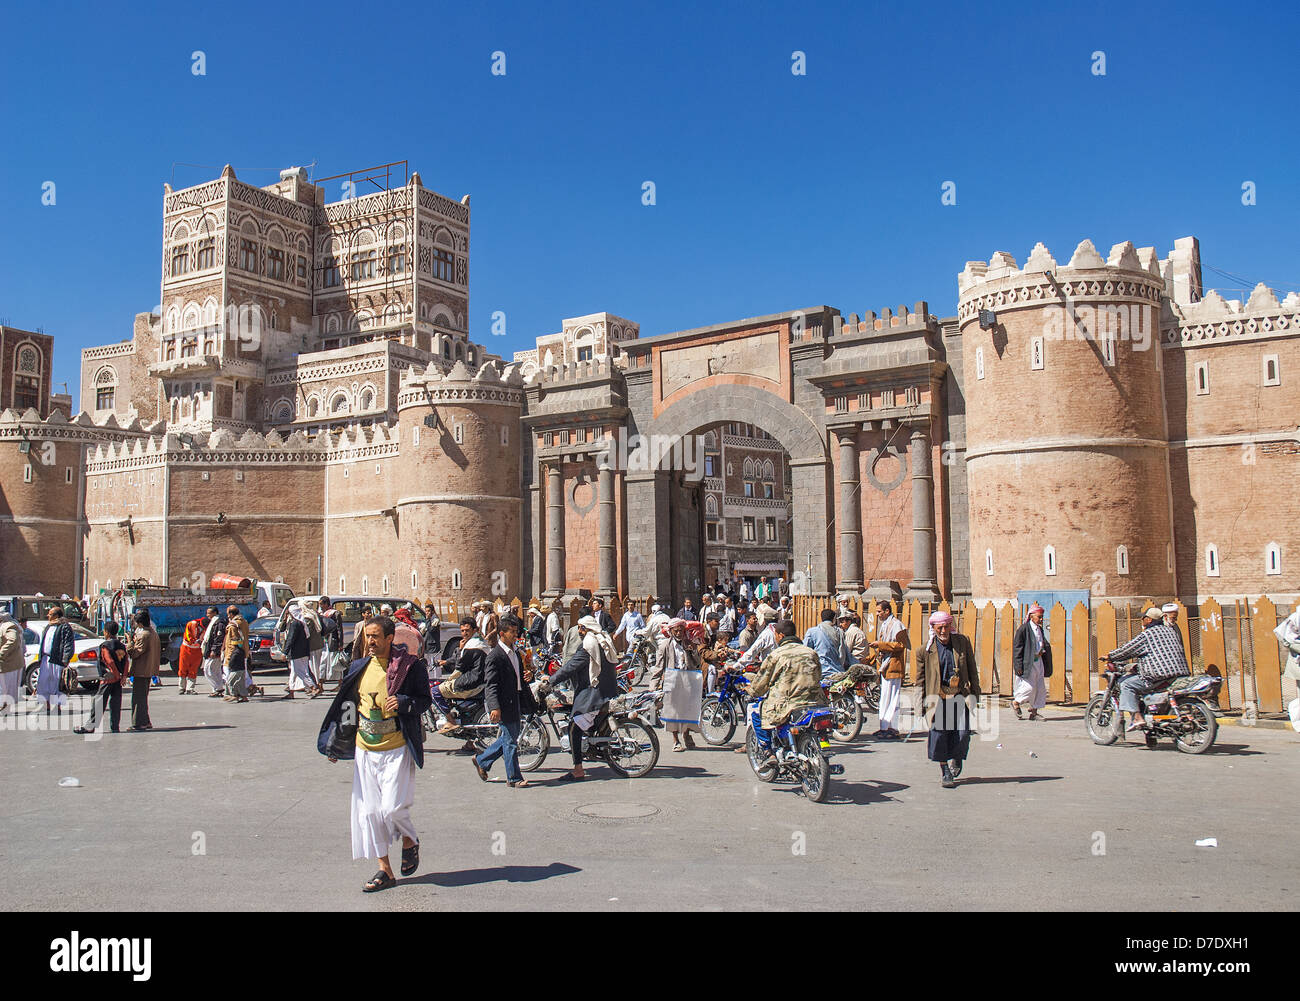 Bab al yemen cancello in città sanaa yemen Foto Stock